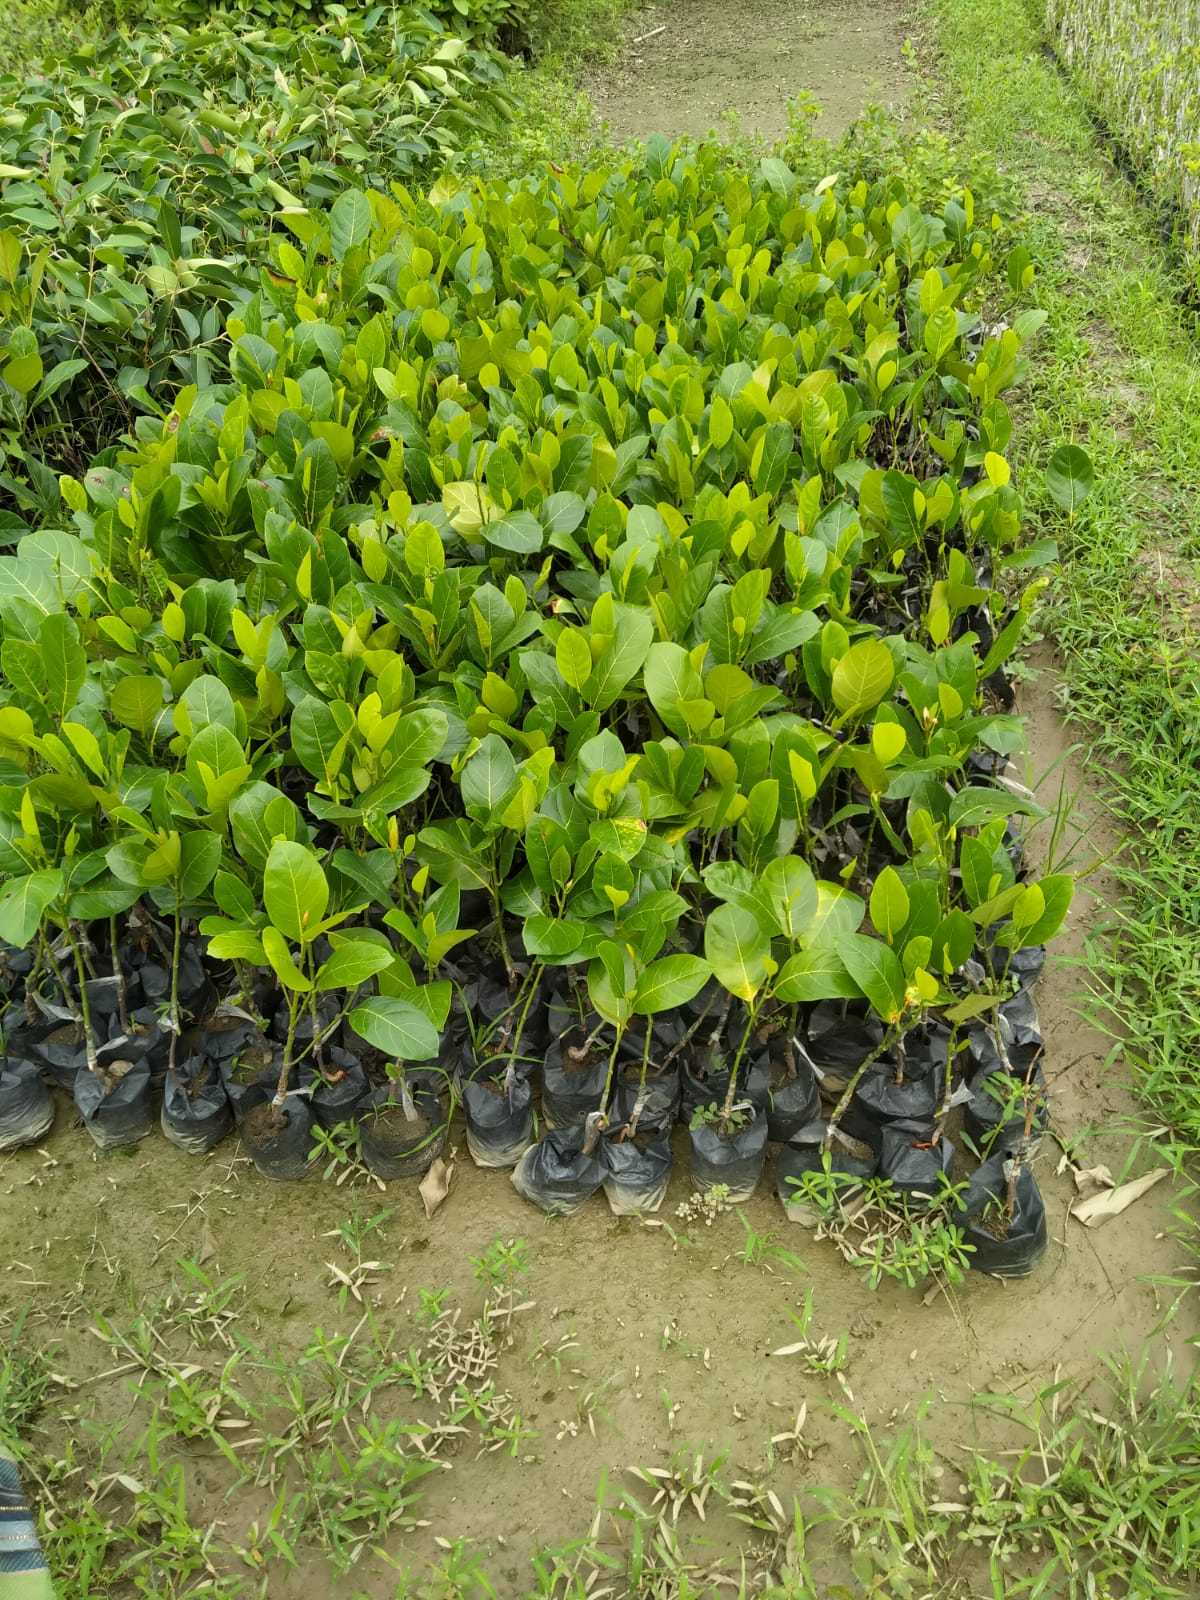 All time jackfruit plants